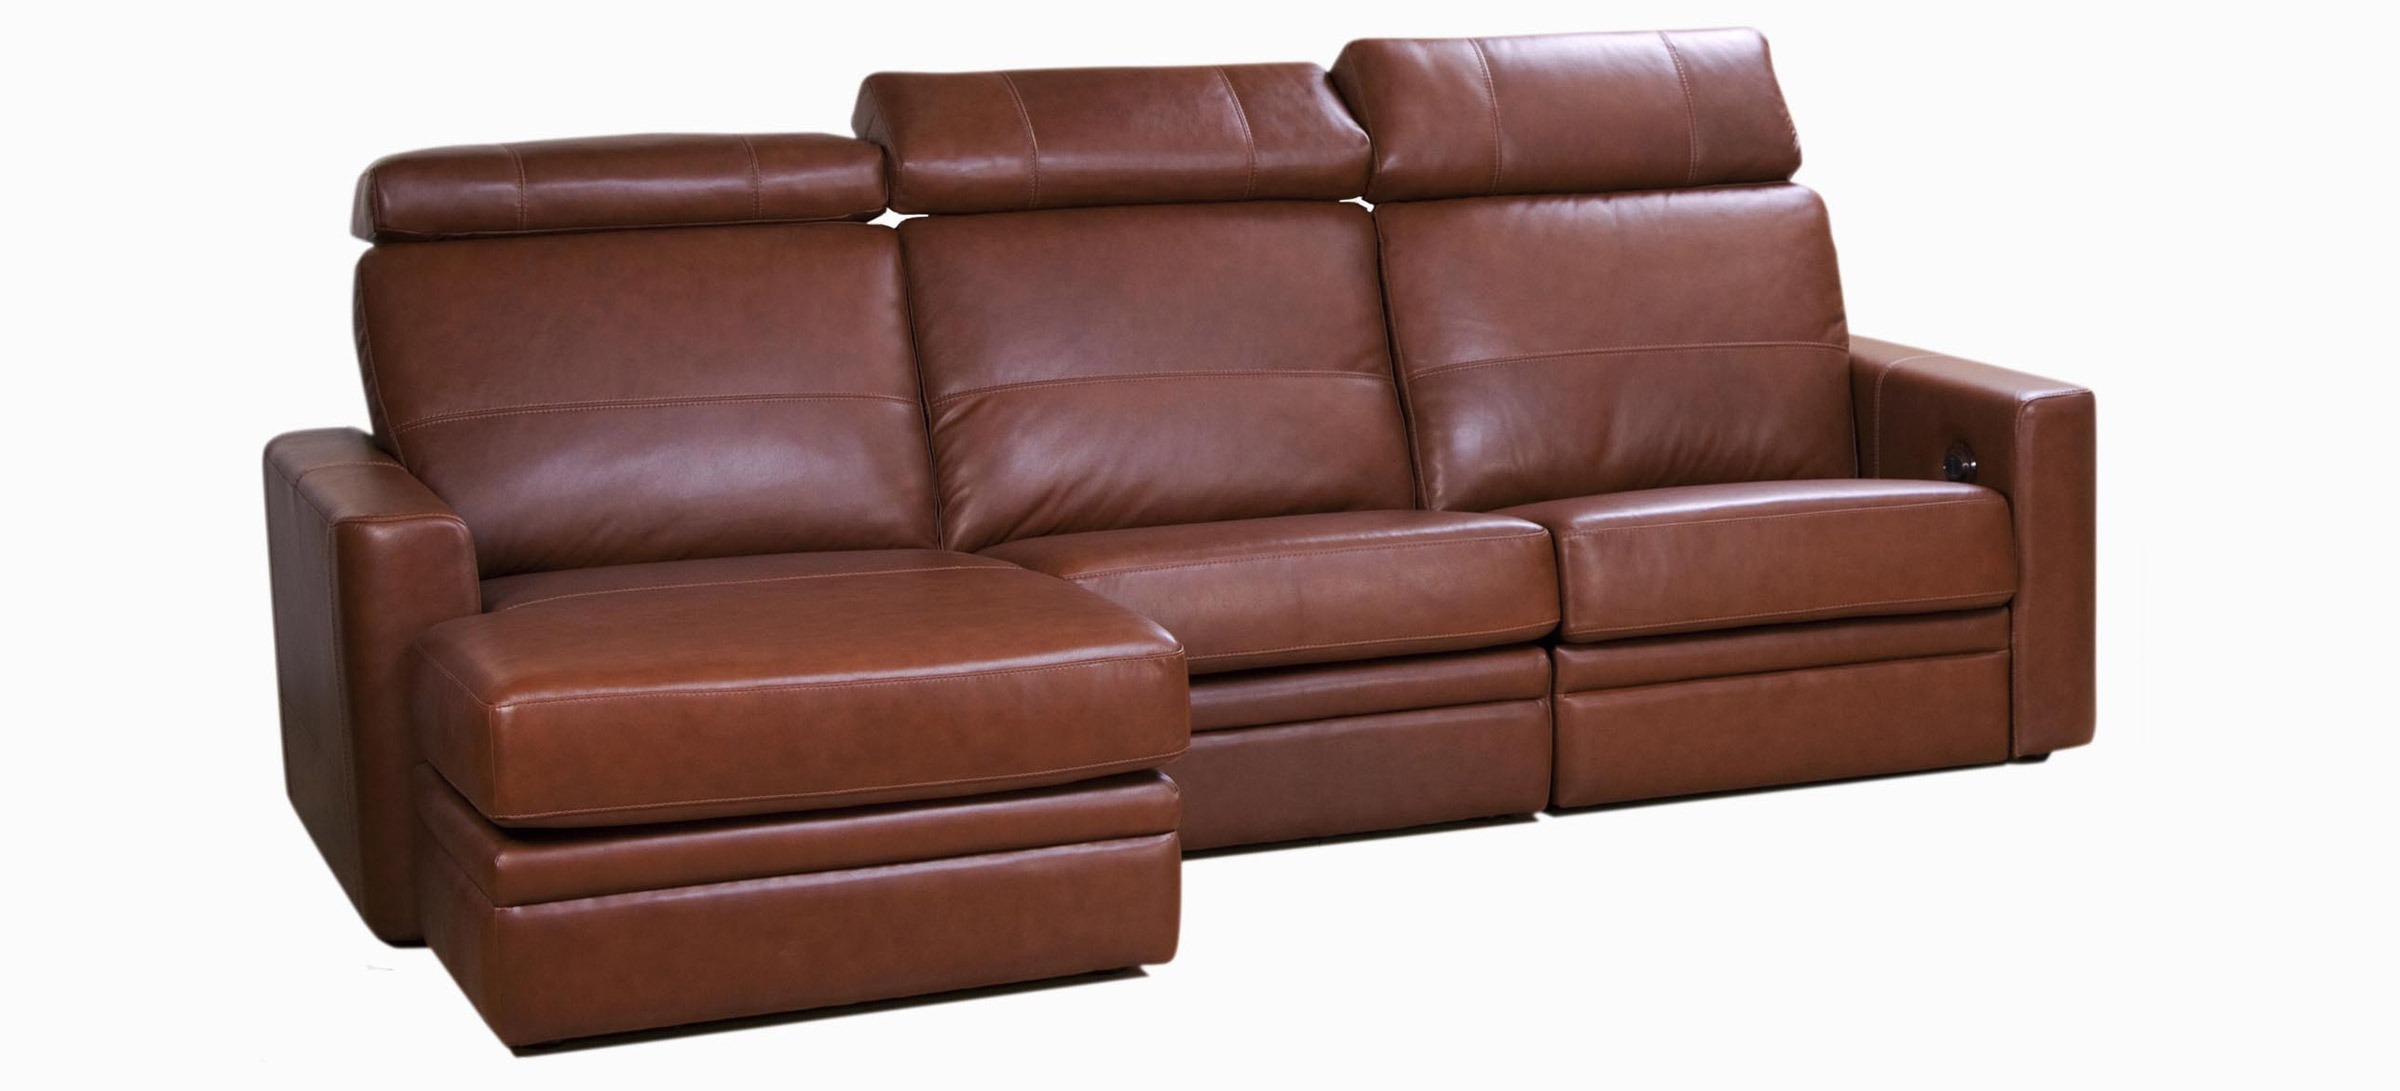 silvano sofa